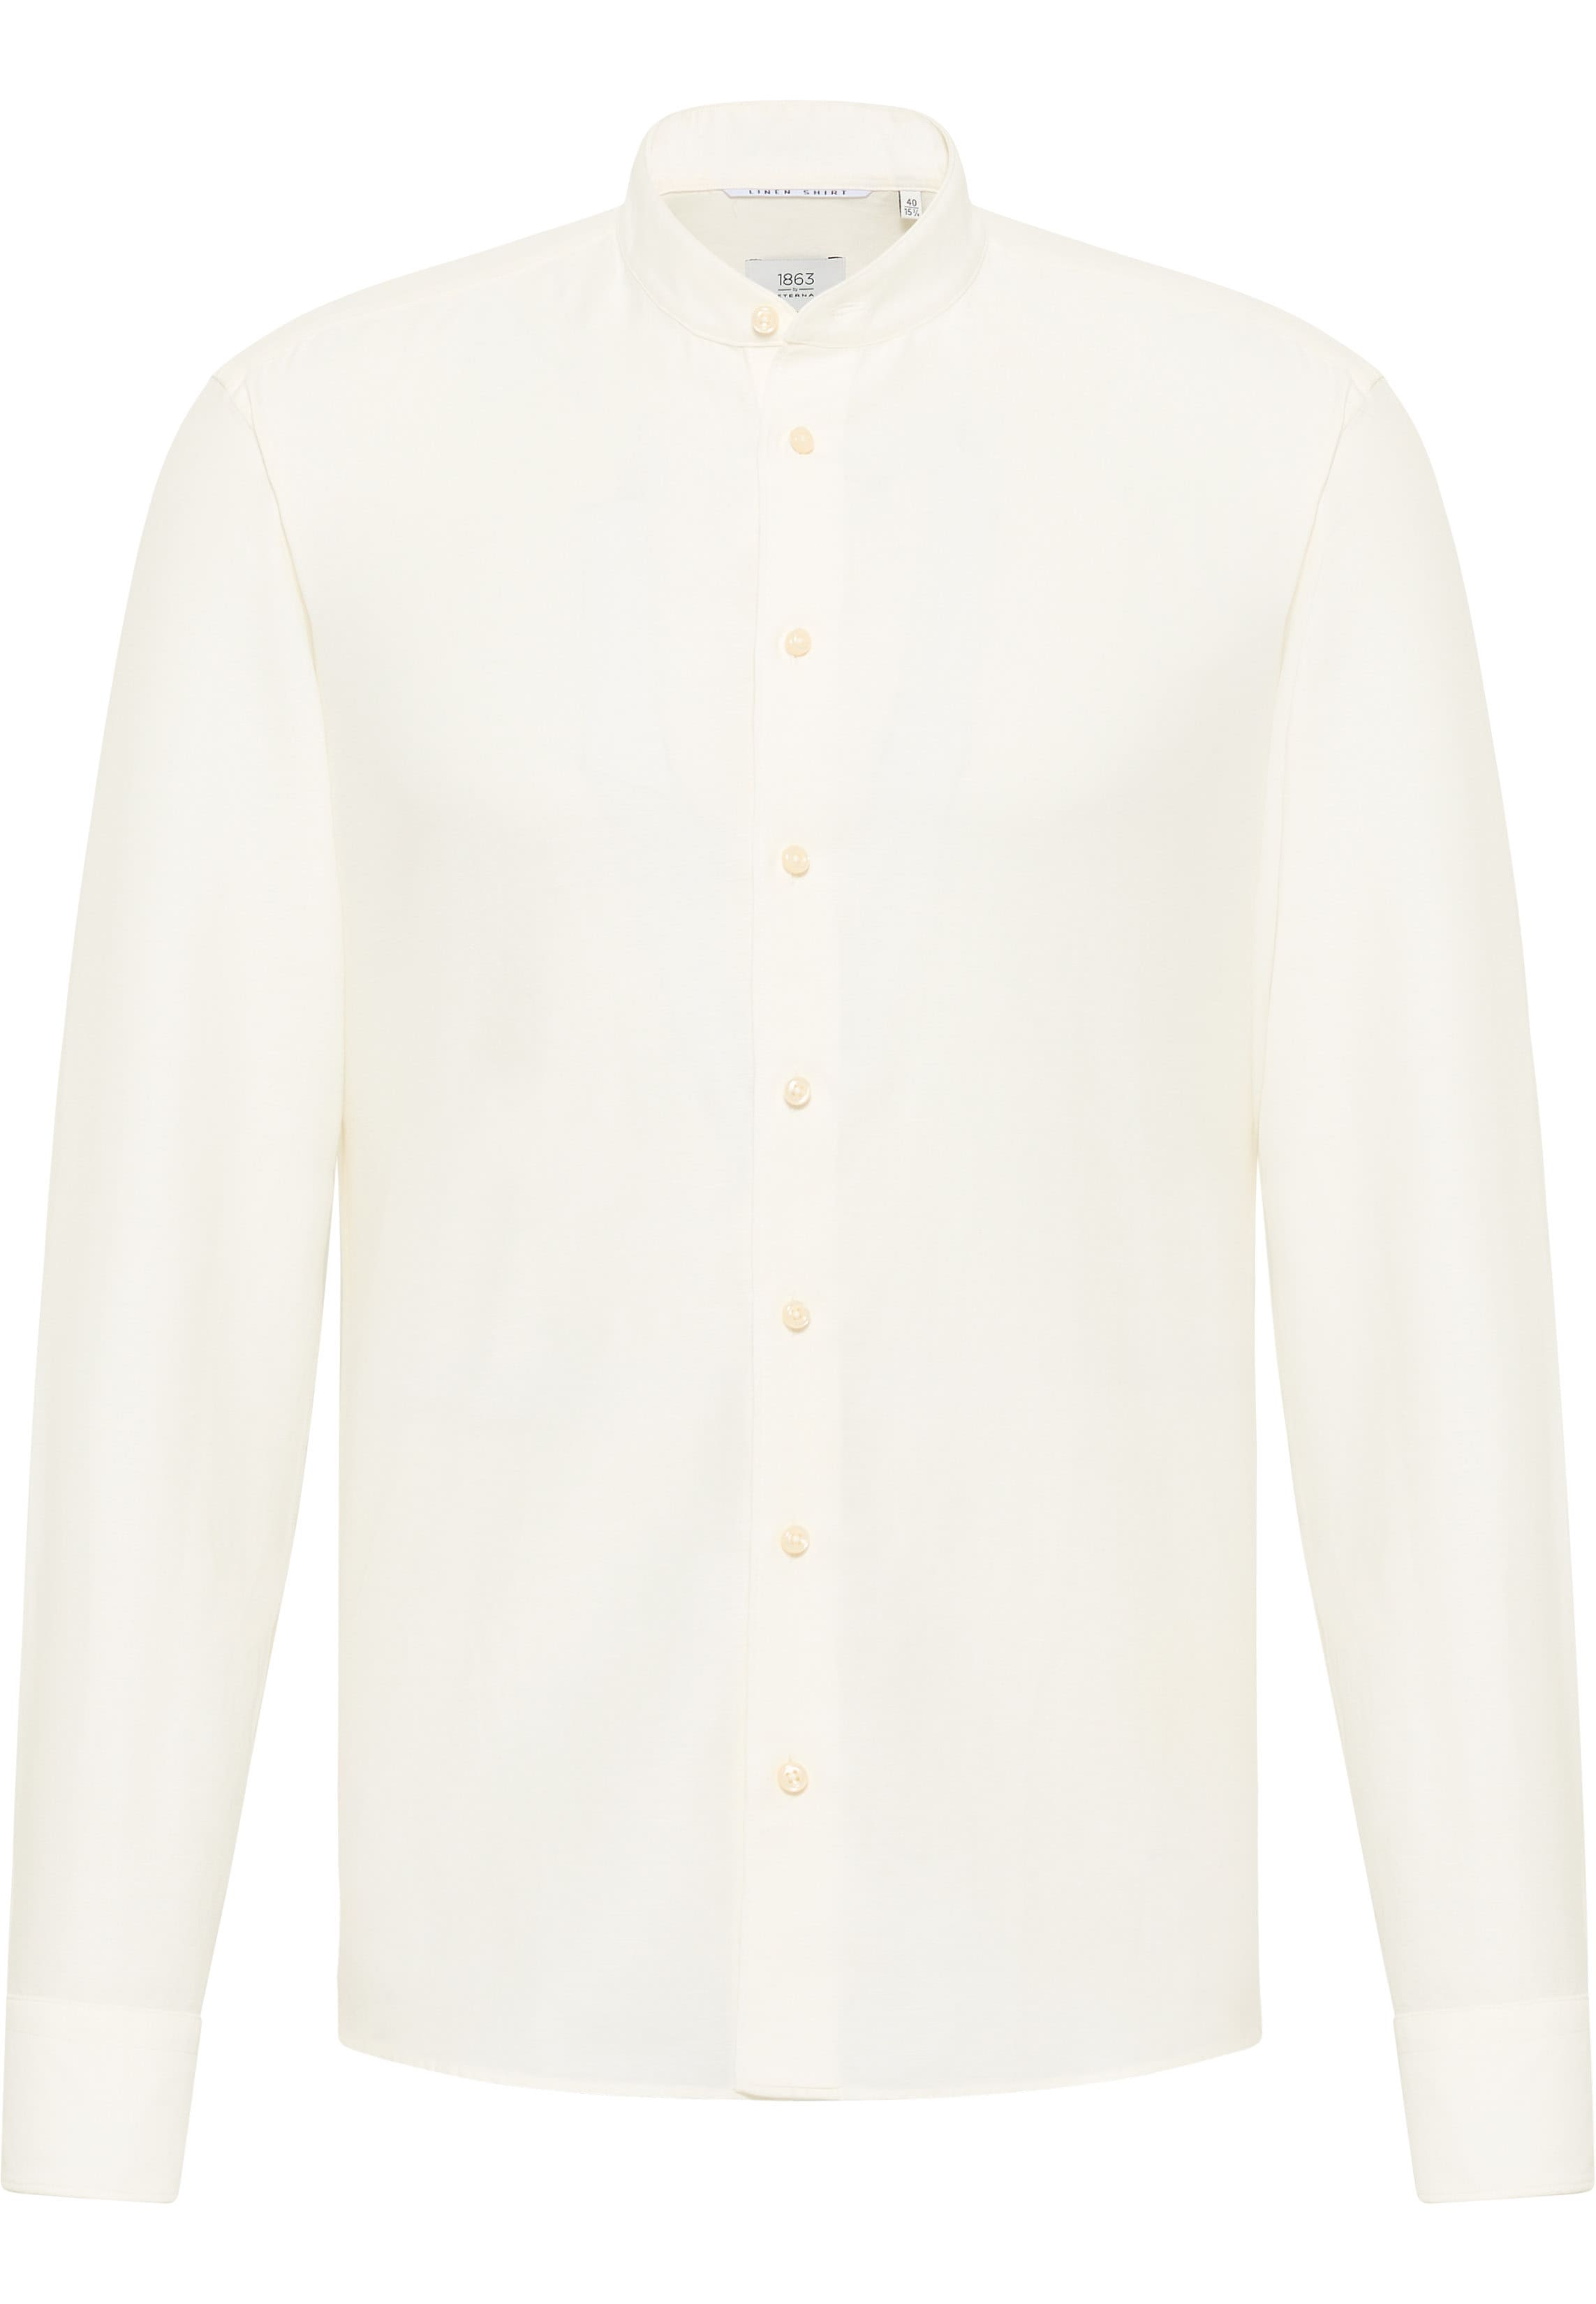 SLIM FIT Linen Shirt in champagne plain